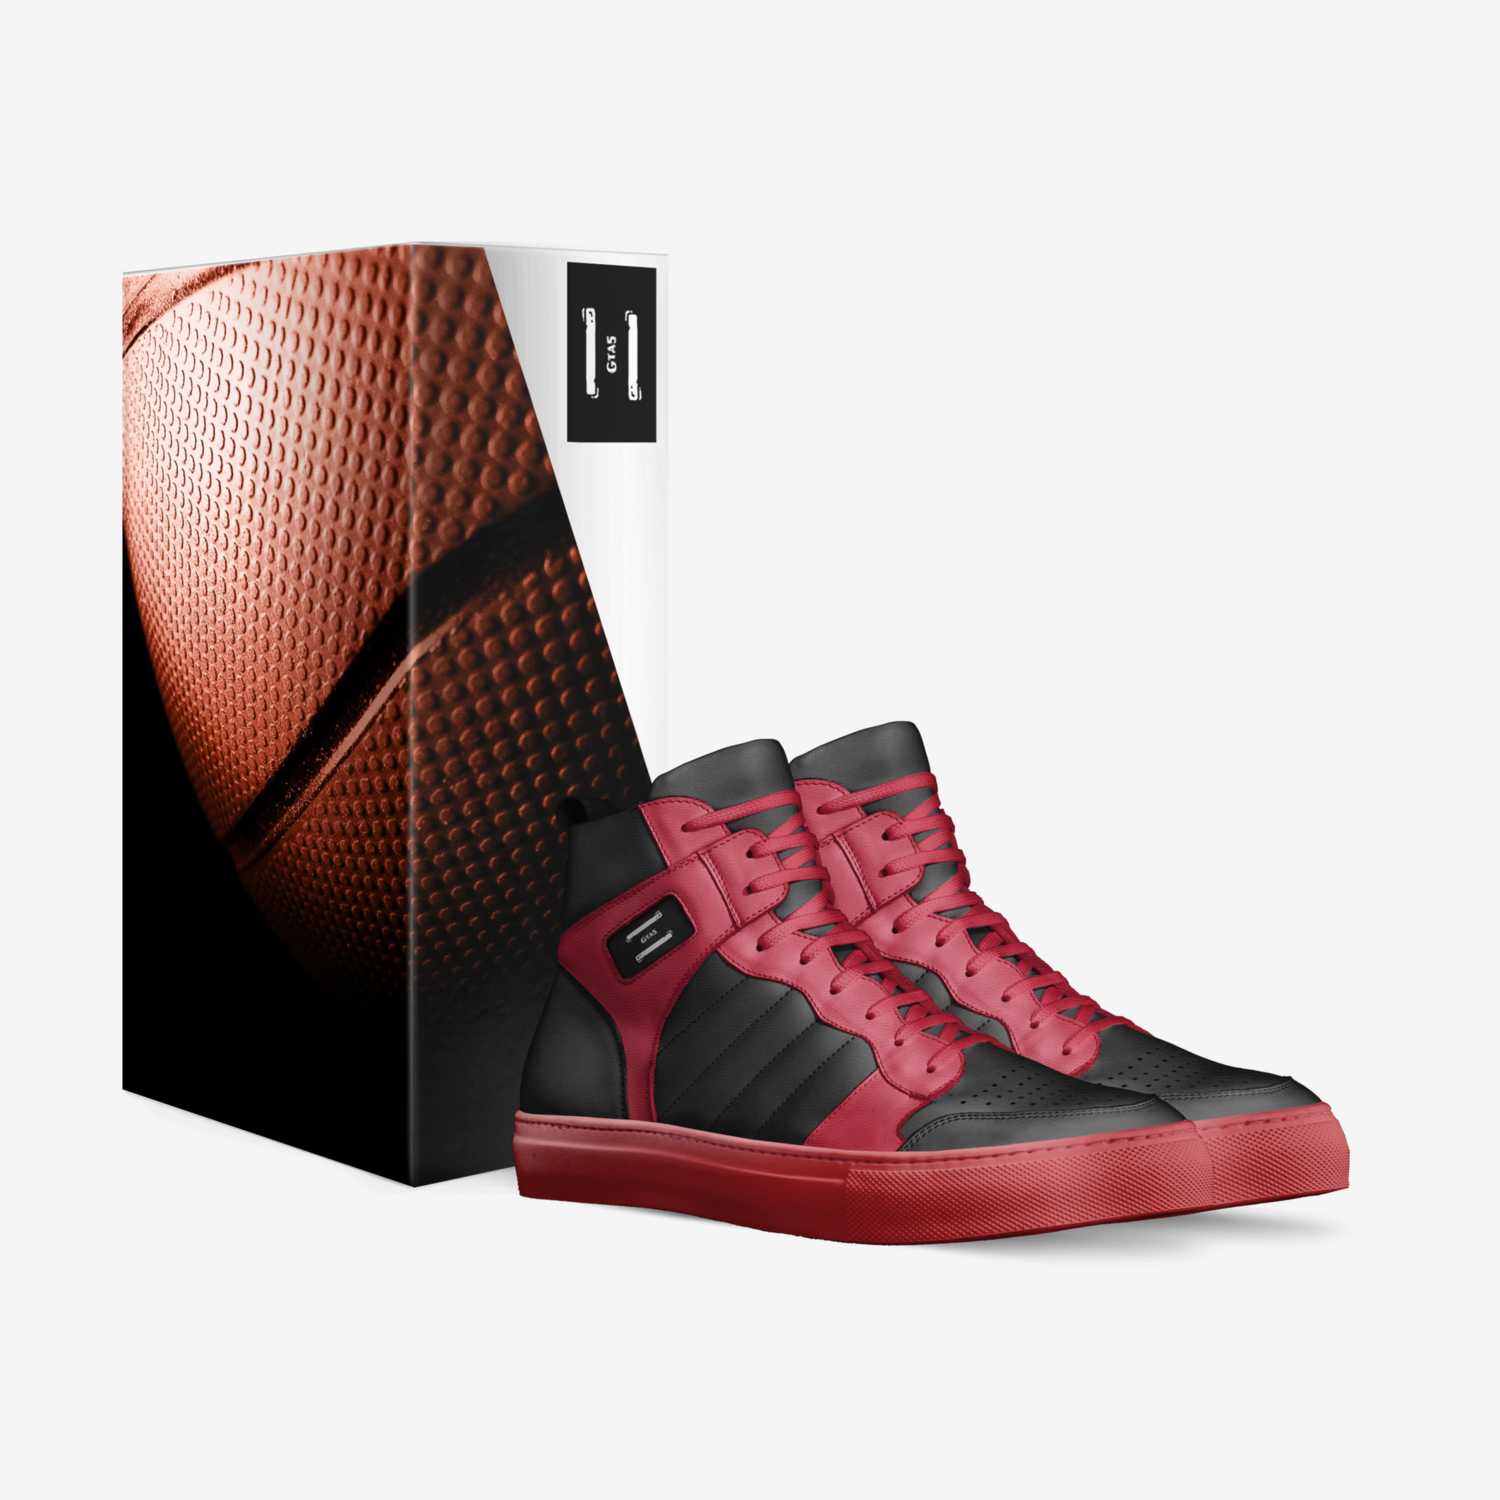 Gta5 custom made in Italy shoes by Kadin | Box view